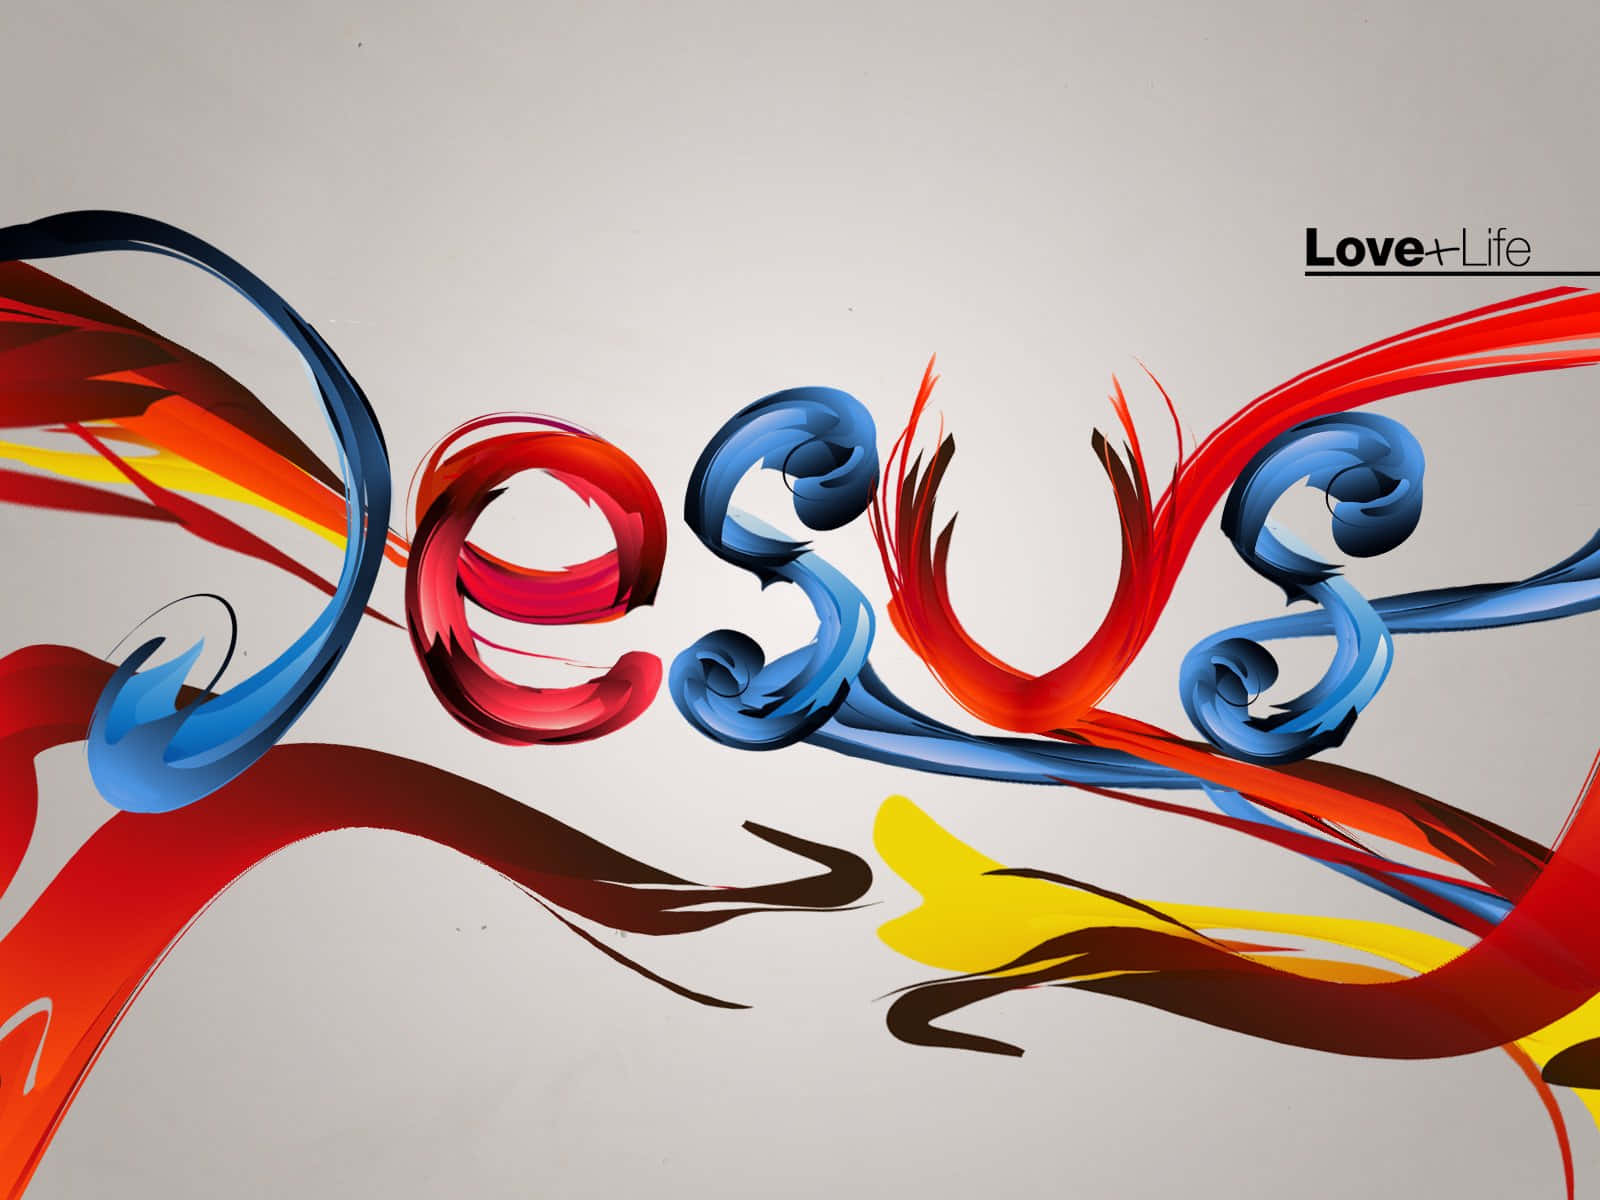 name of jesus background